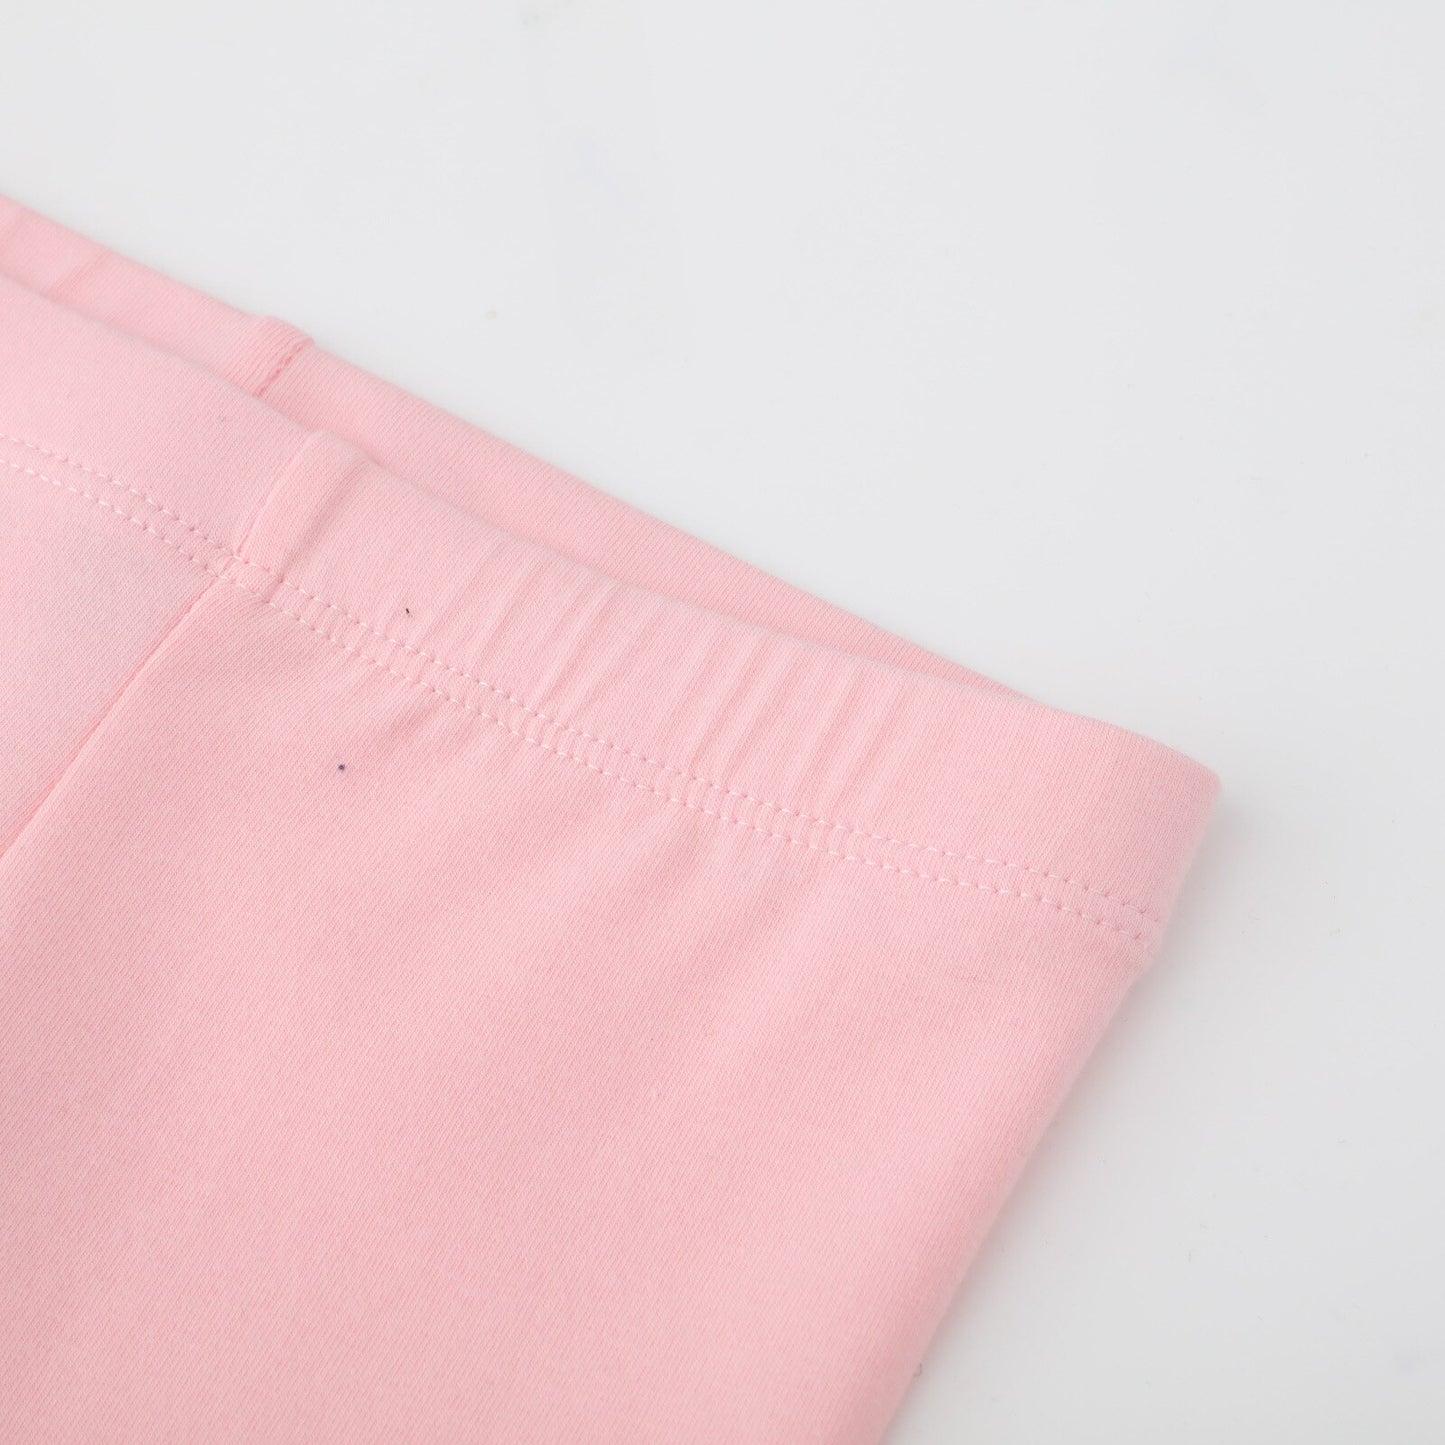 Girls Animal Printed Cotton Embroidered Skinny Leggings - Grey, Pink, Bright Pink